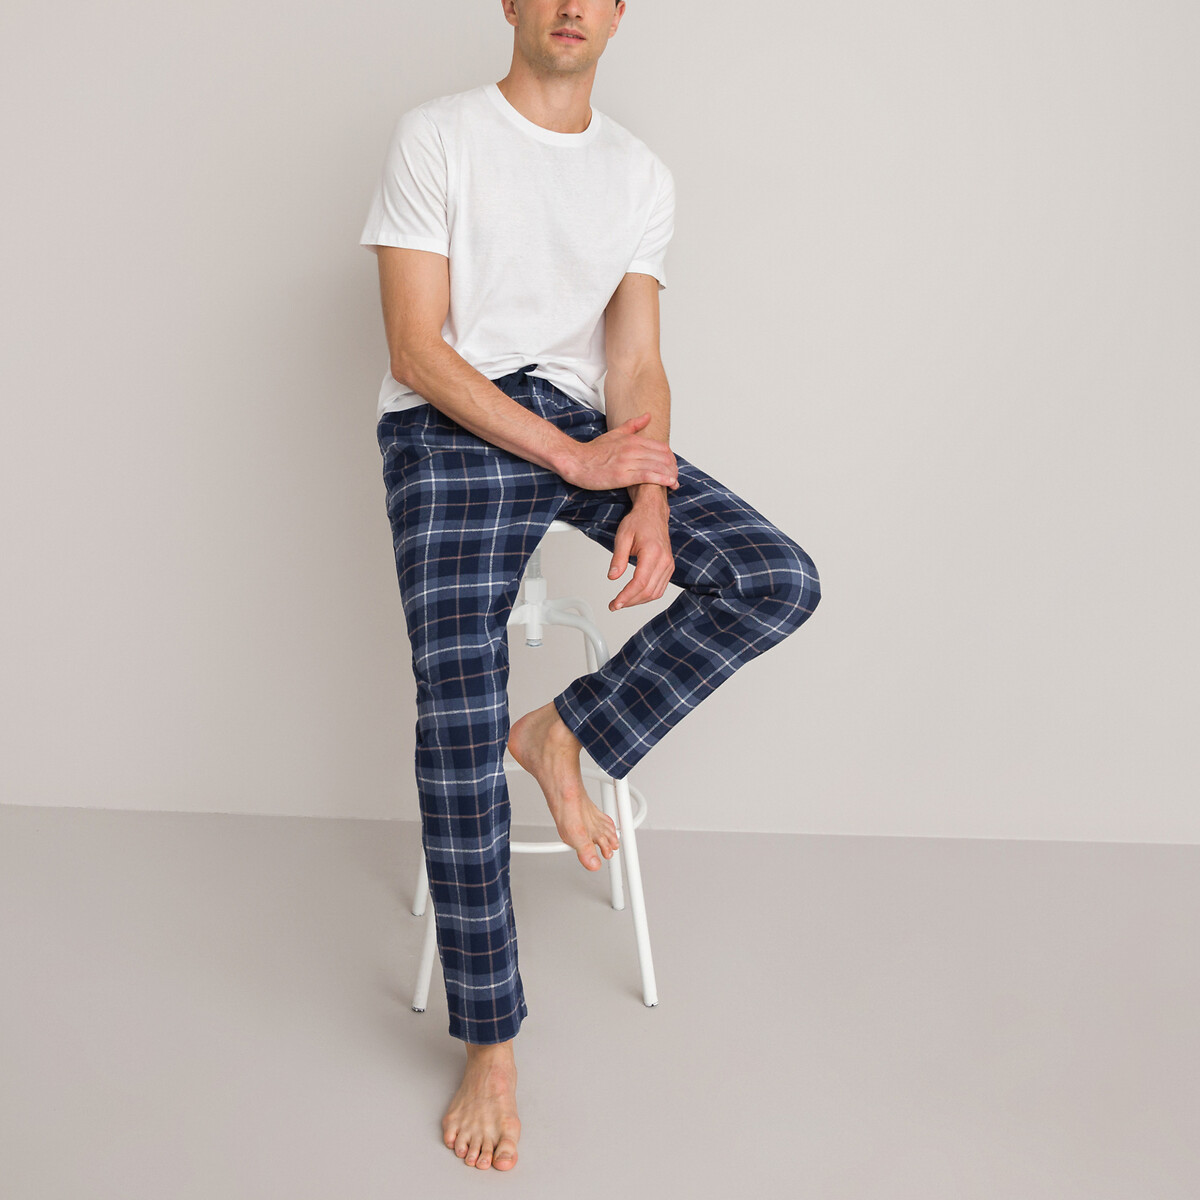 Mens Flannel Pyjama Bottoms Brushed Cotton Check Lounge Pants Nightwear  M5XL  eBay